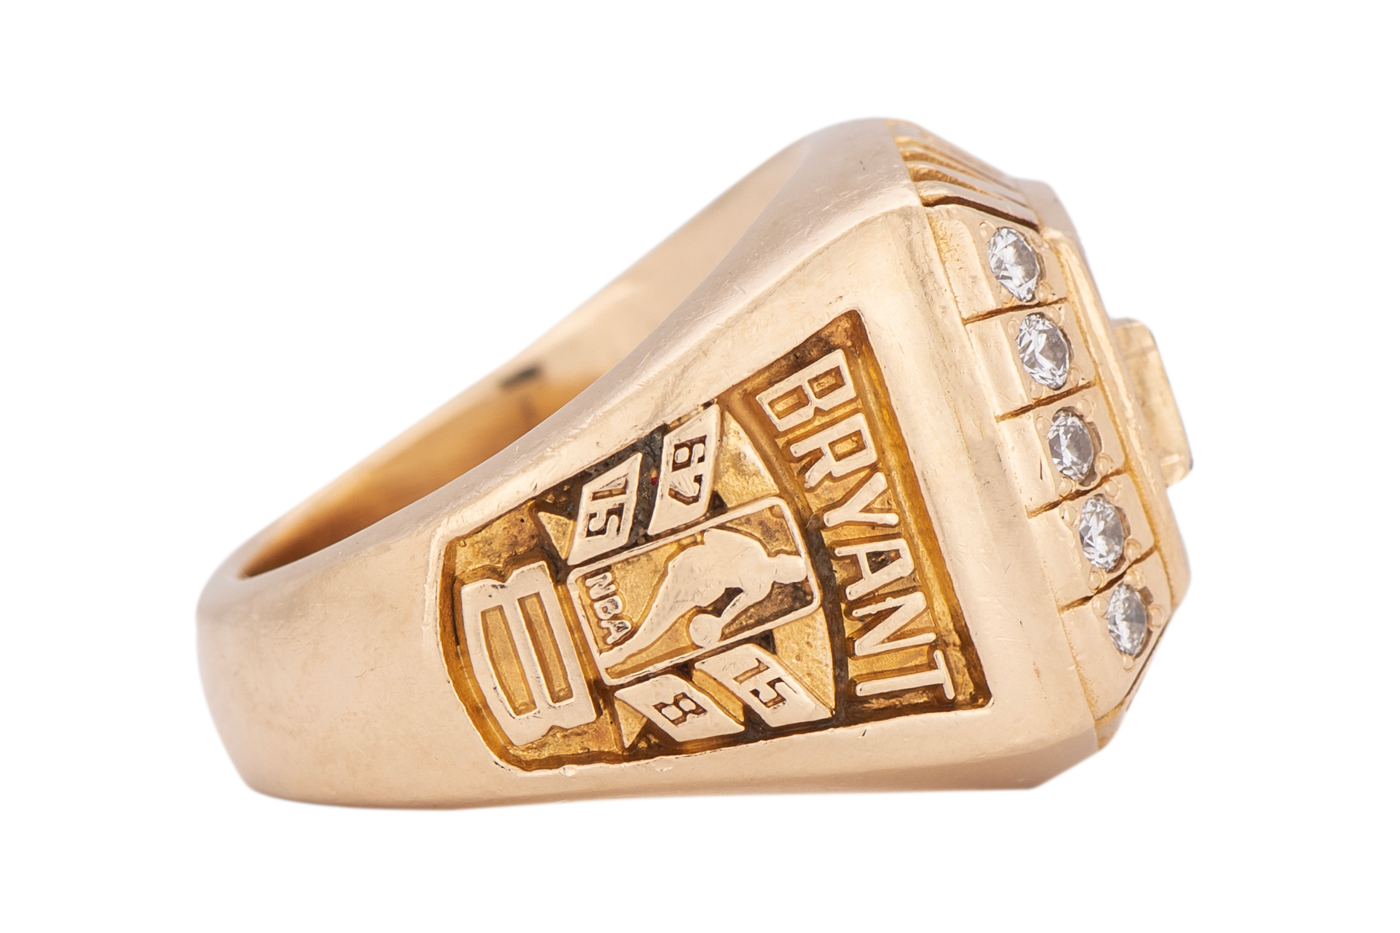 https://hypebeast.com/image/2020/05/kobe-pamela-bryant-los-angeles-lakers-championship-ring-206-000-usd-auction-002.jpg